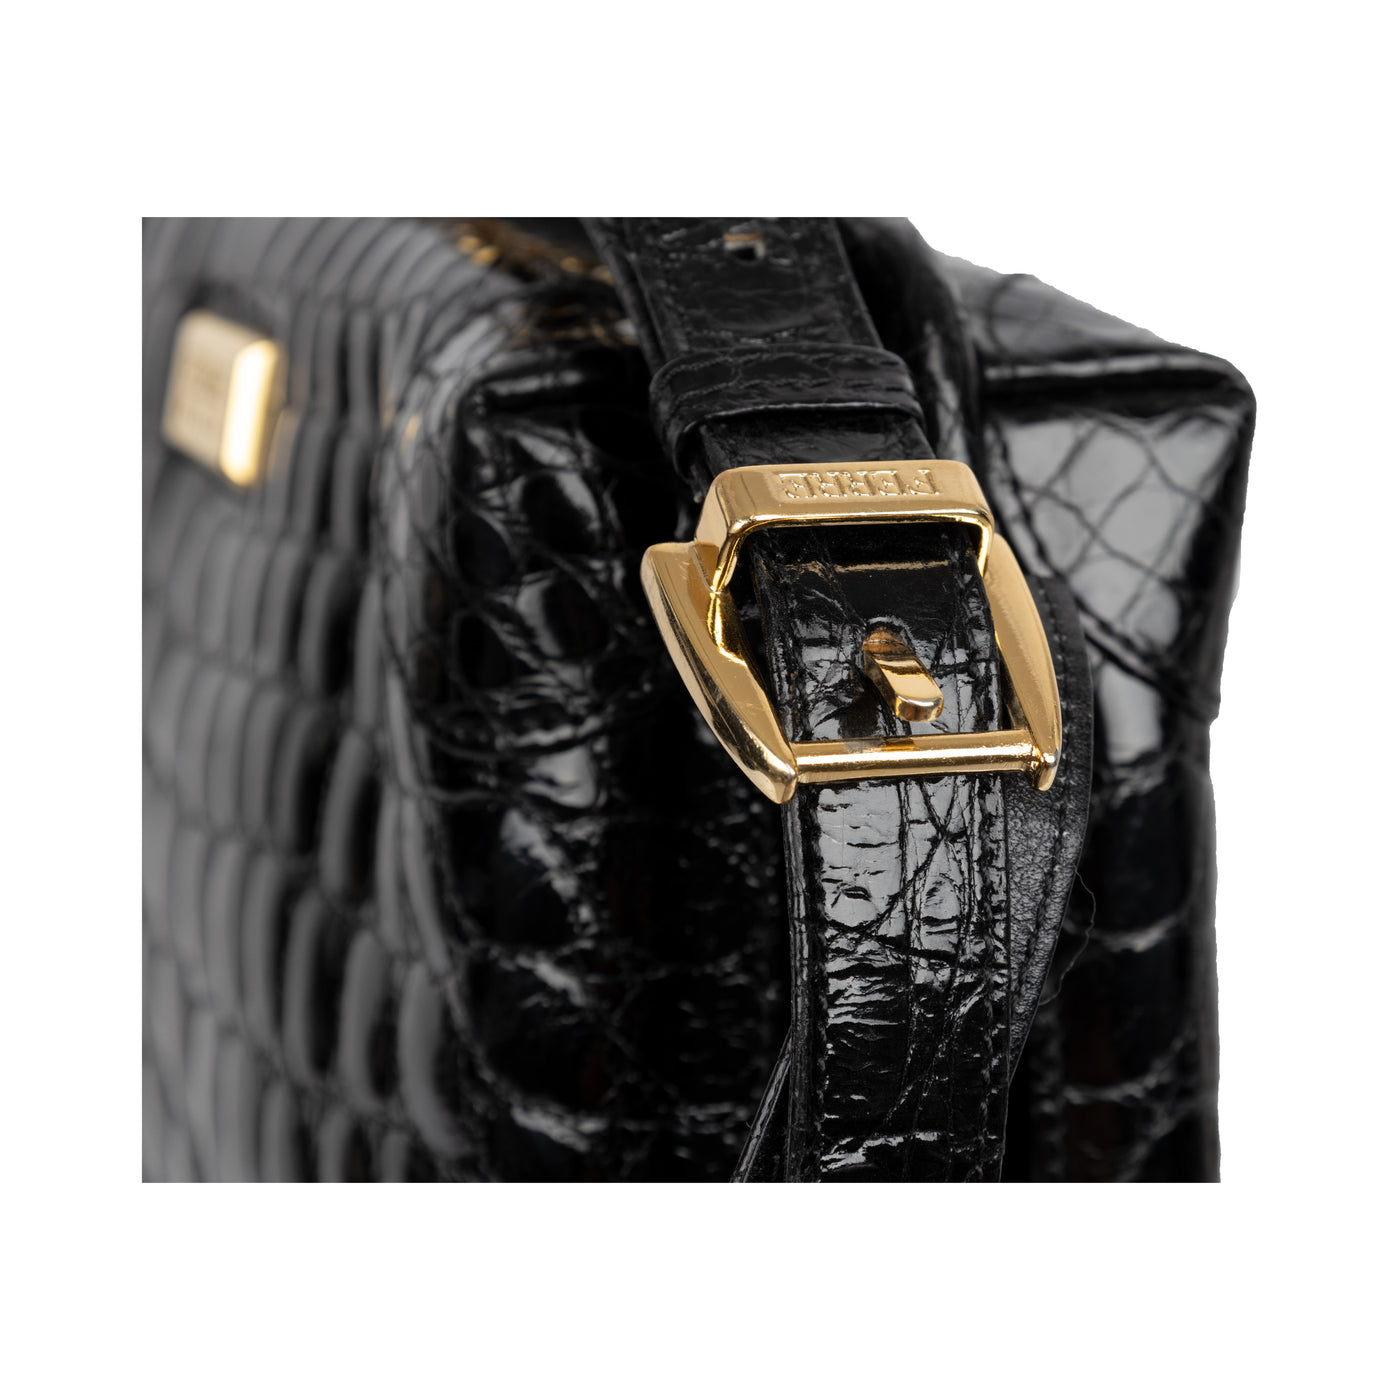 Gianfranco Ferré Exotic Leather Crossbody Bag - '90s